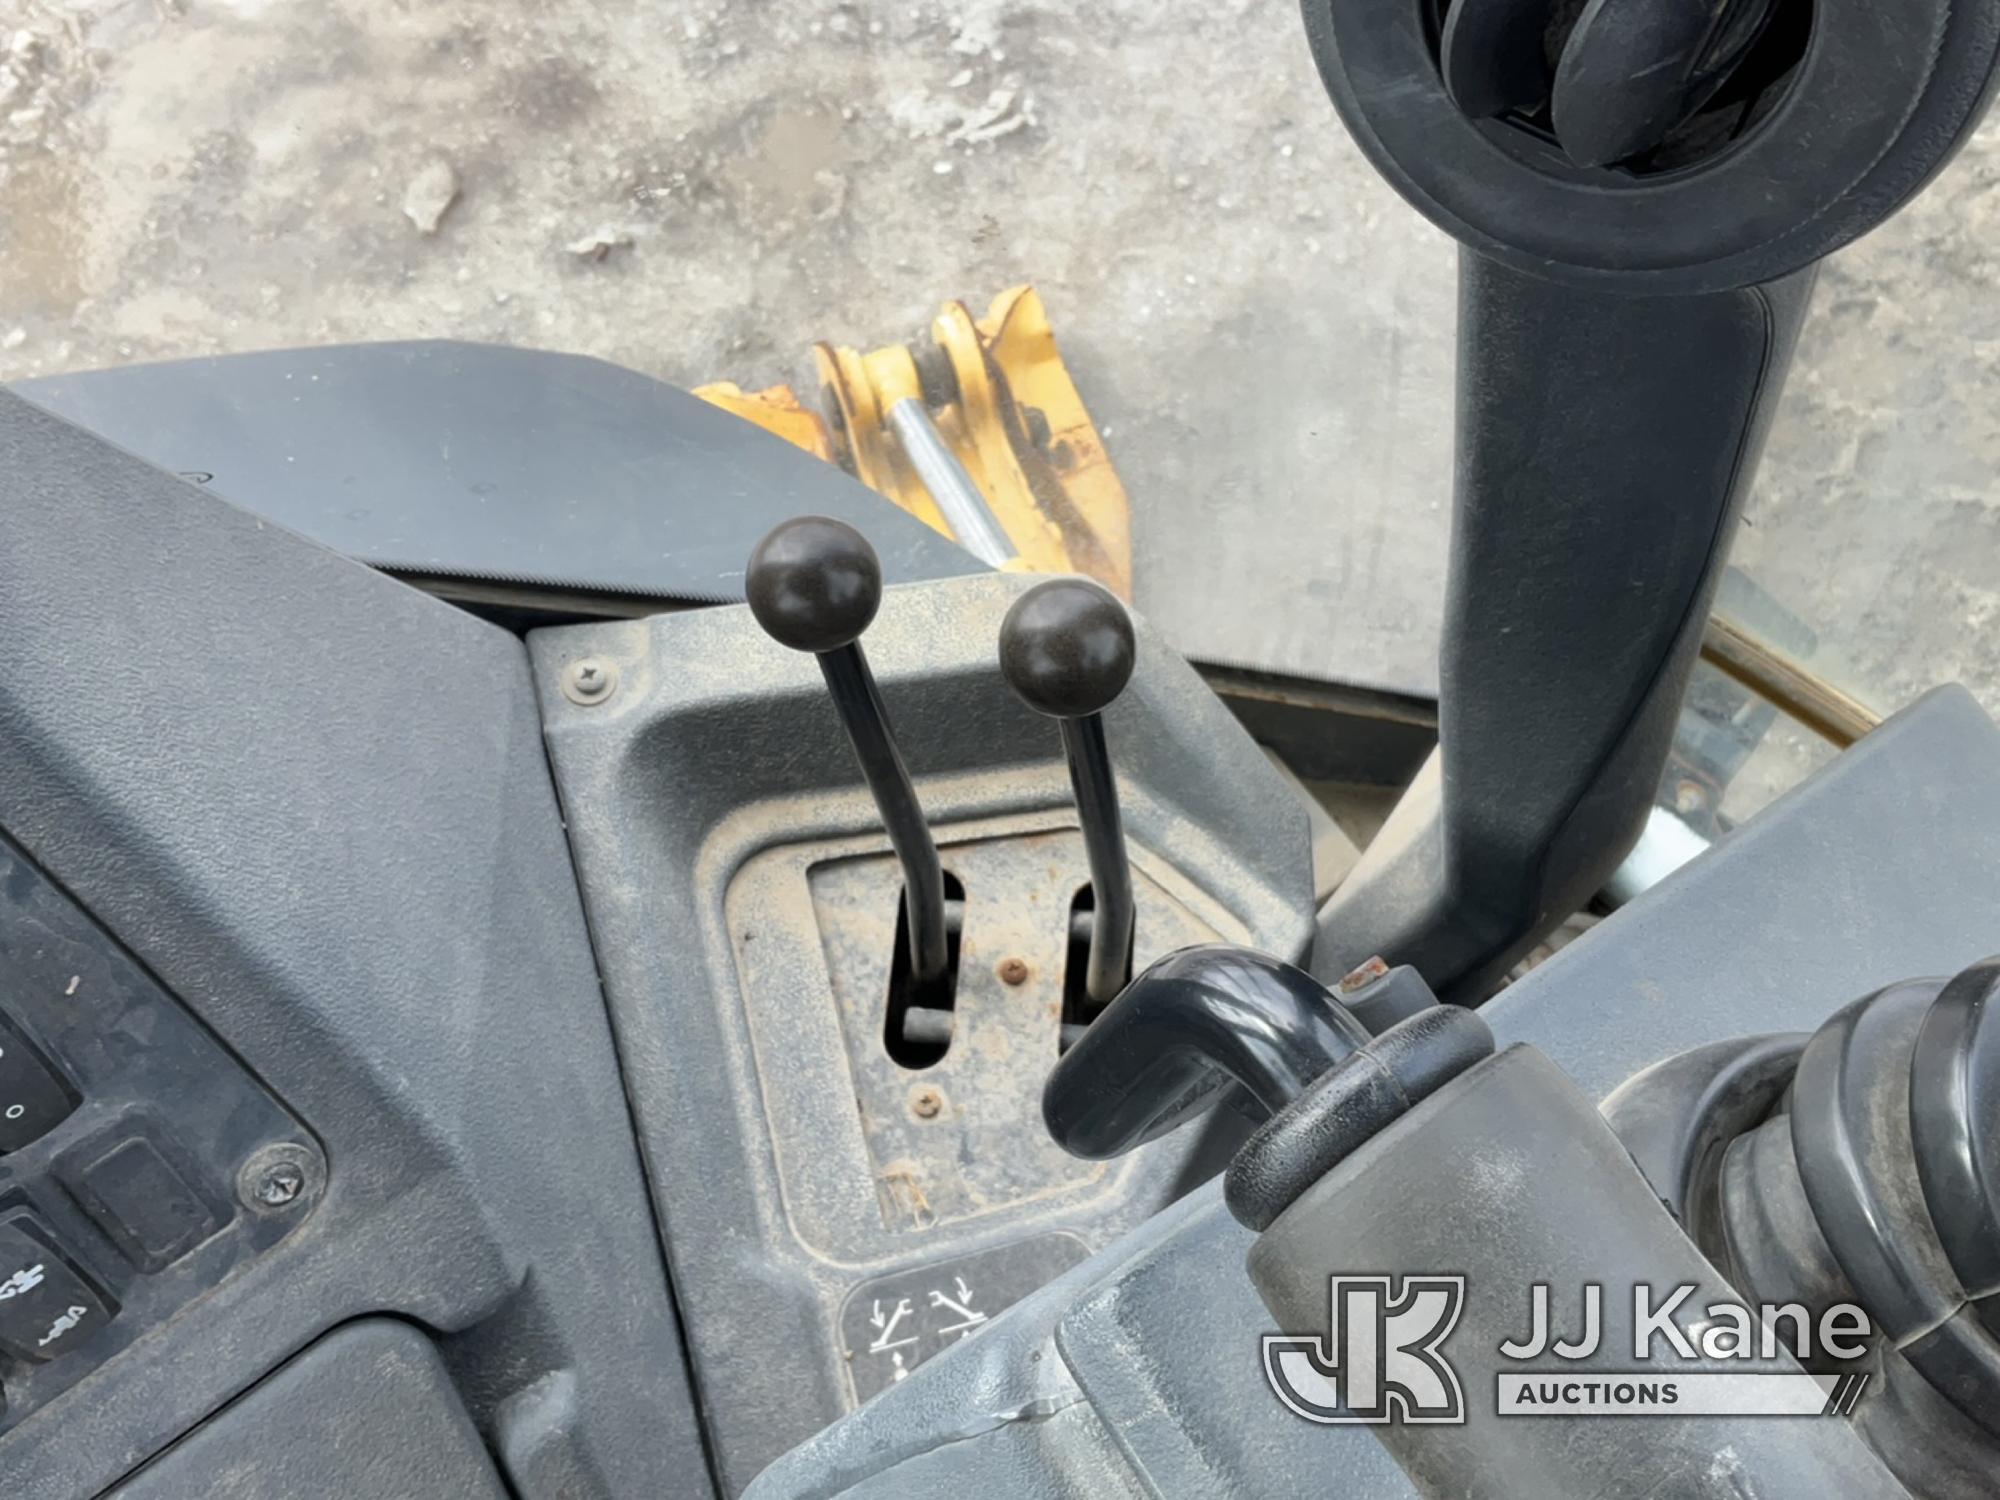 (Rome, NY) 2015 John Deere 310K 4x4 Tractor Loader Backhoe No Title) (Runs & Operates